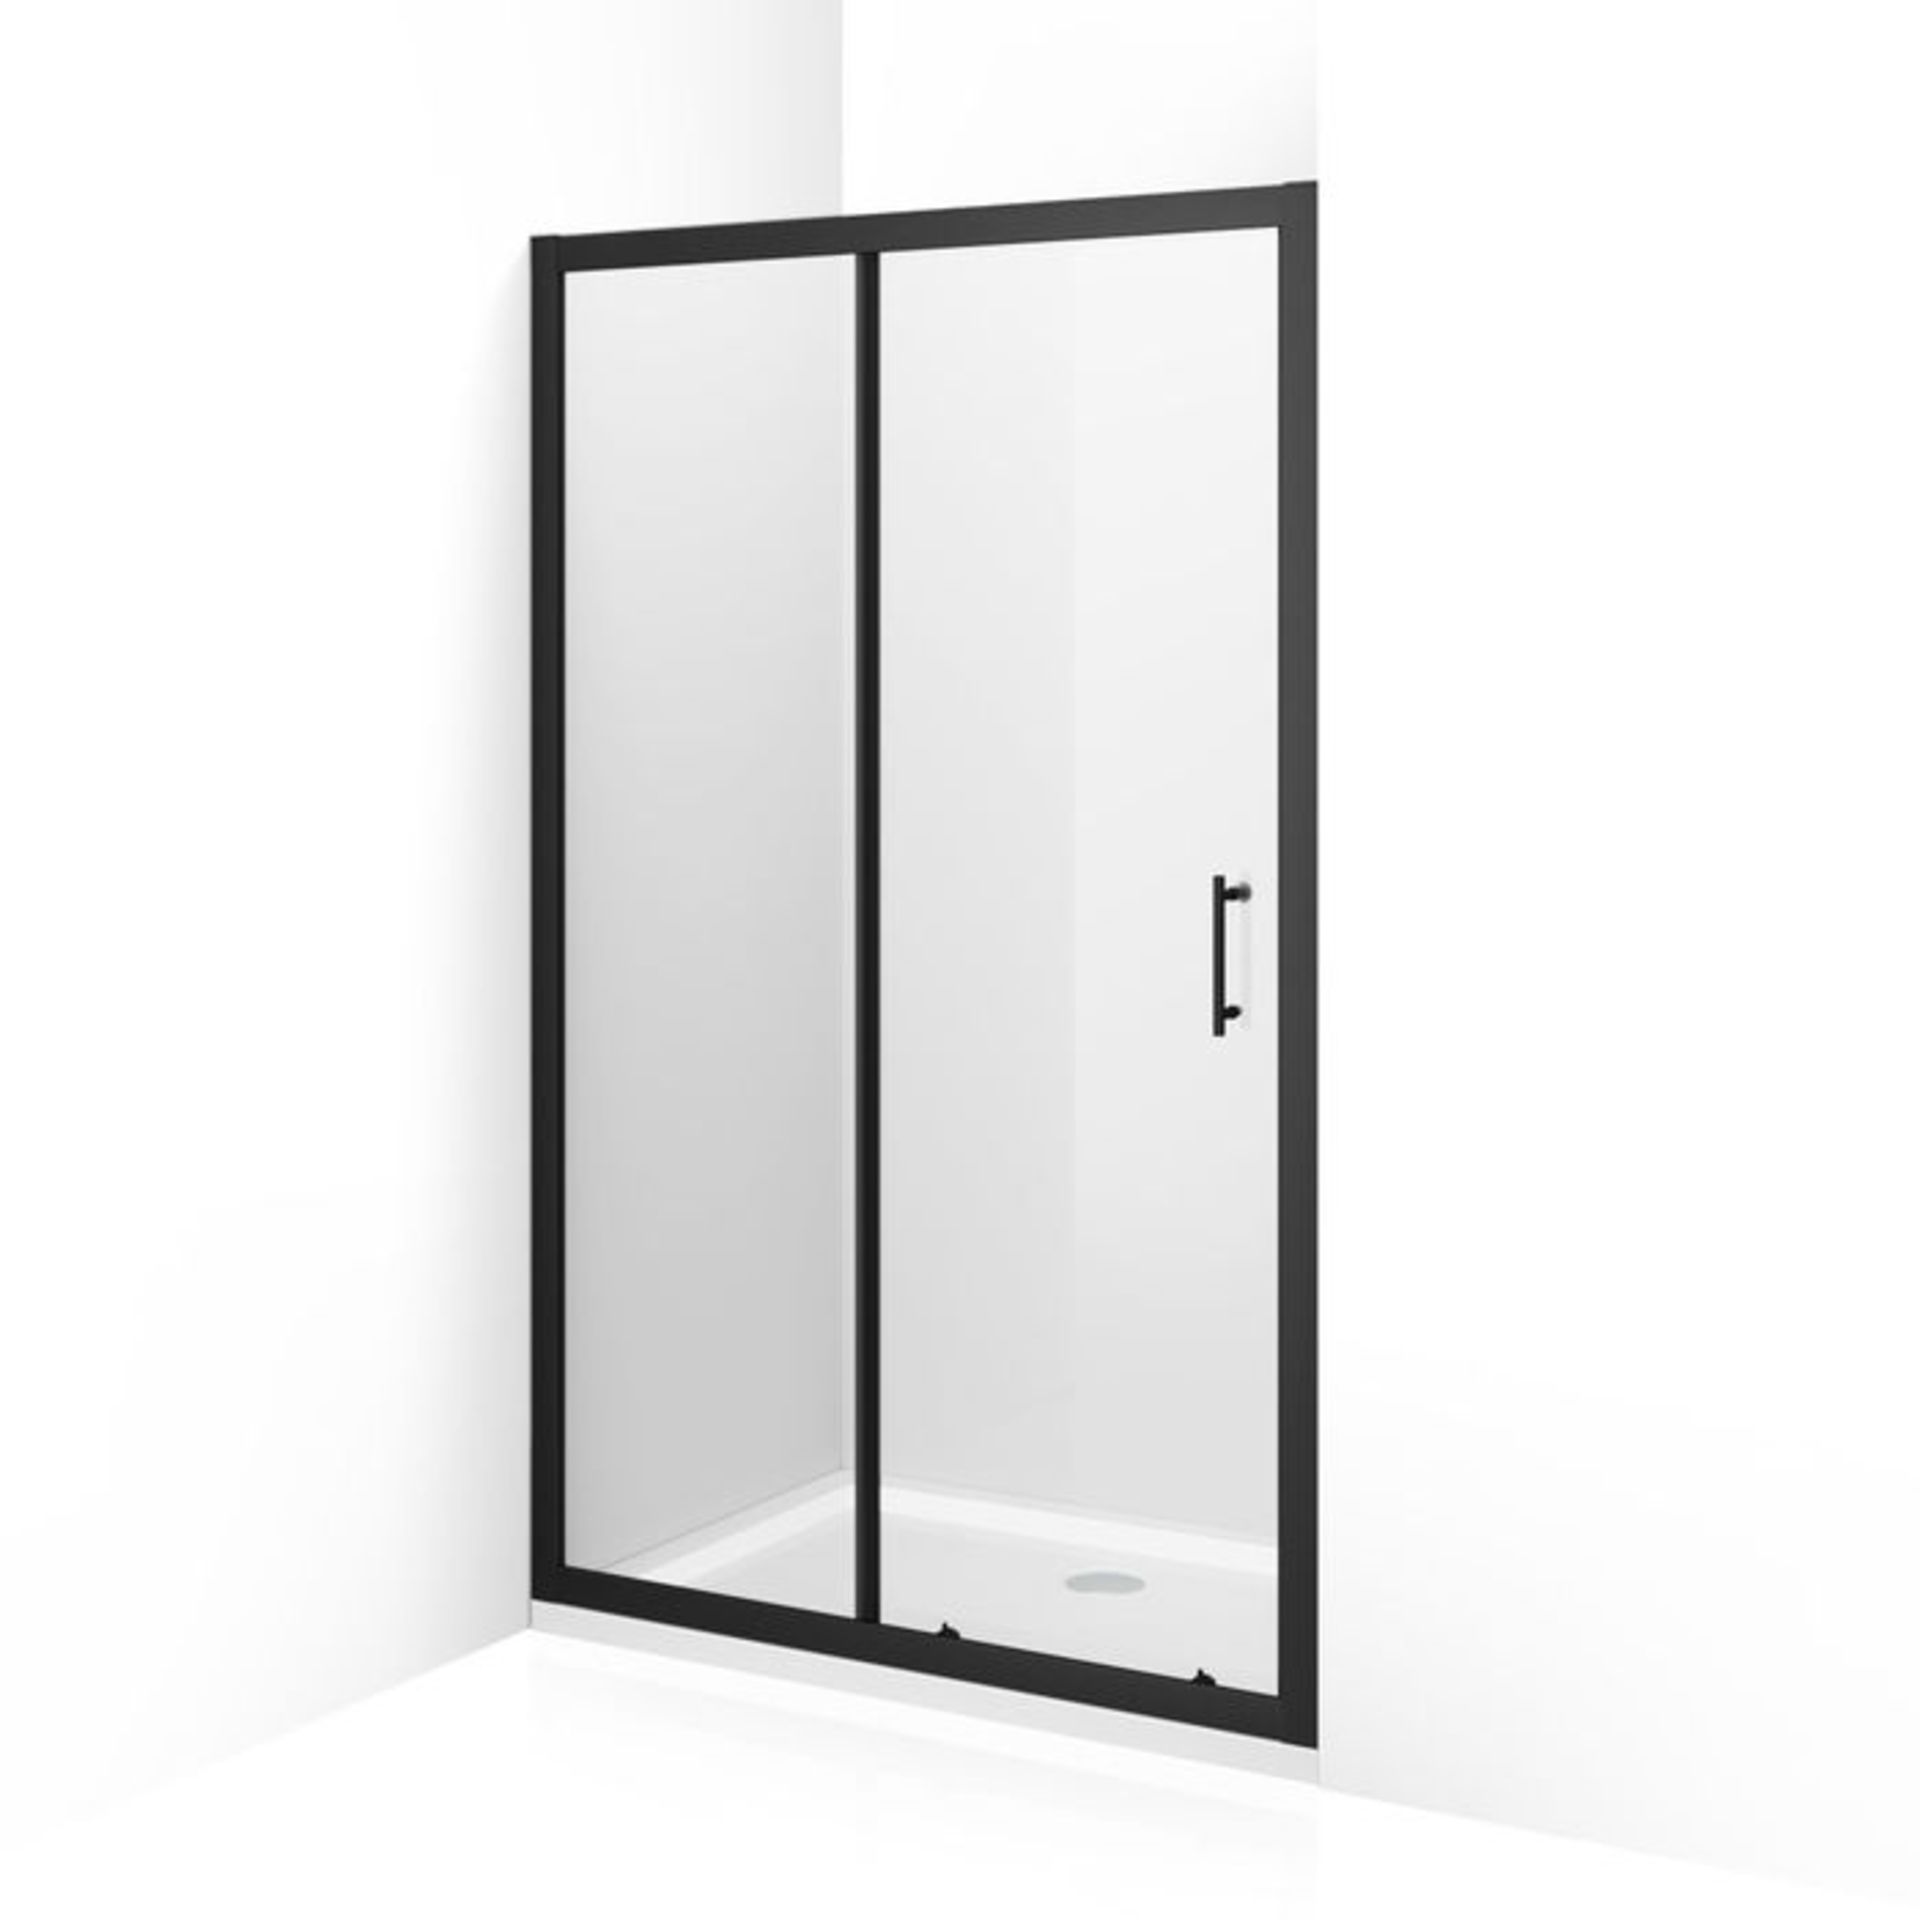 (TA35) 1200mm - 6mm Black Frame Sliding Shower Door. RRP £399.99. Stylish matte black finish frame - Image 4 of 4